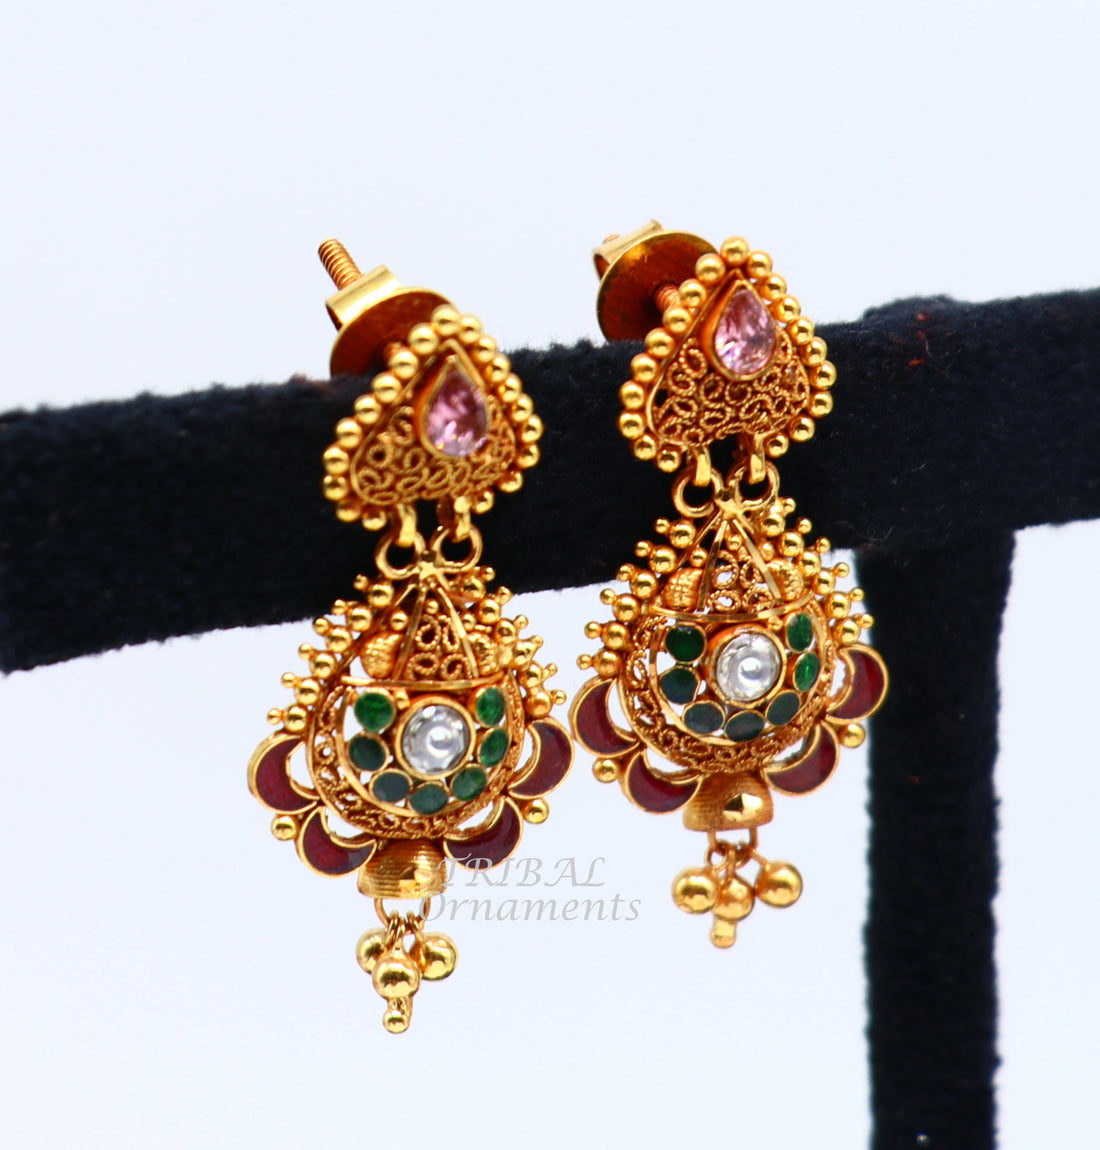 22k yellow gold fabulous handmade filigree work antique designer stud earrings brides wedding jewelry from Rajasthan India er163 - TRIBAL ORNAMENTS